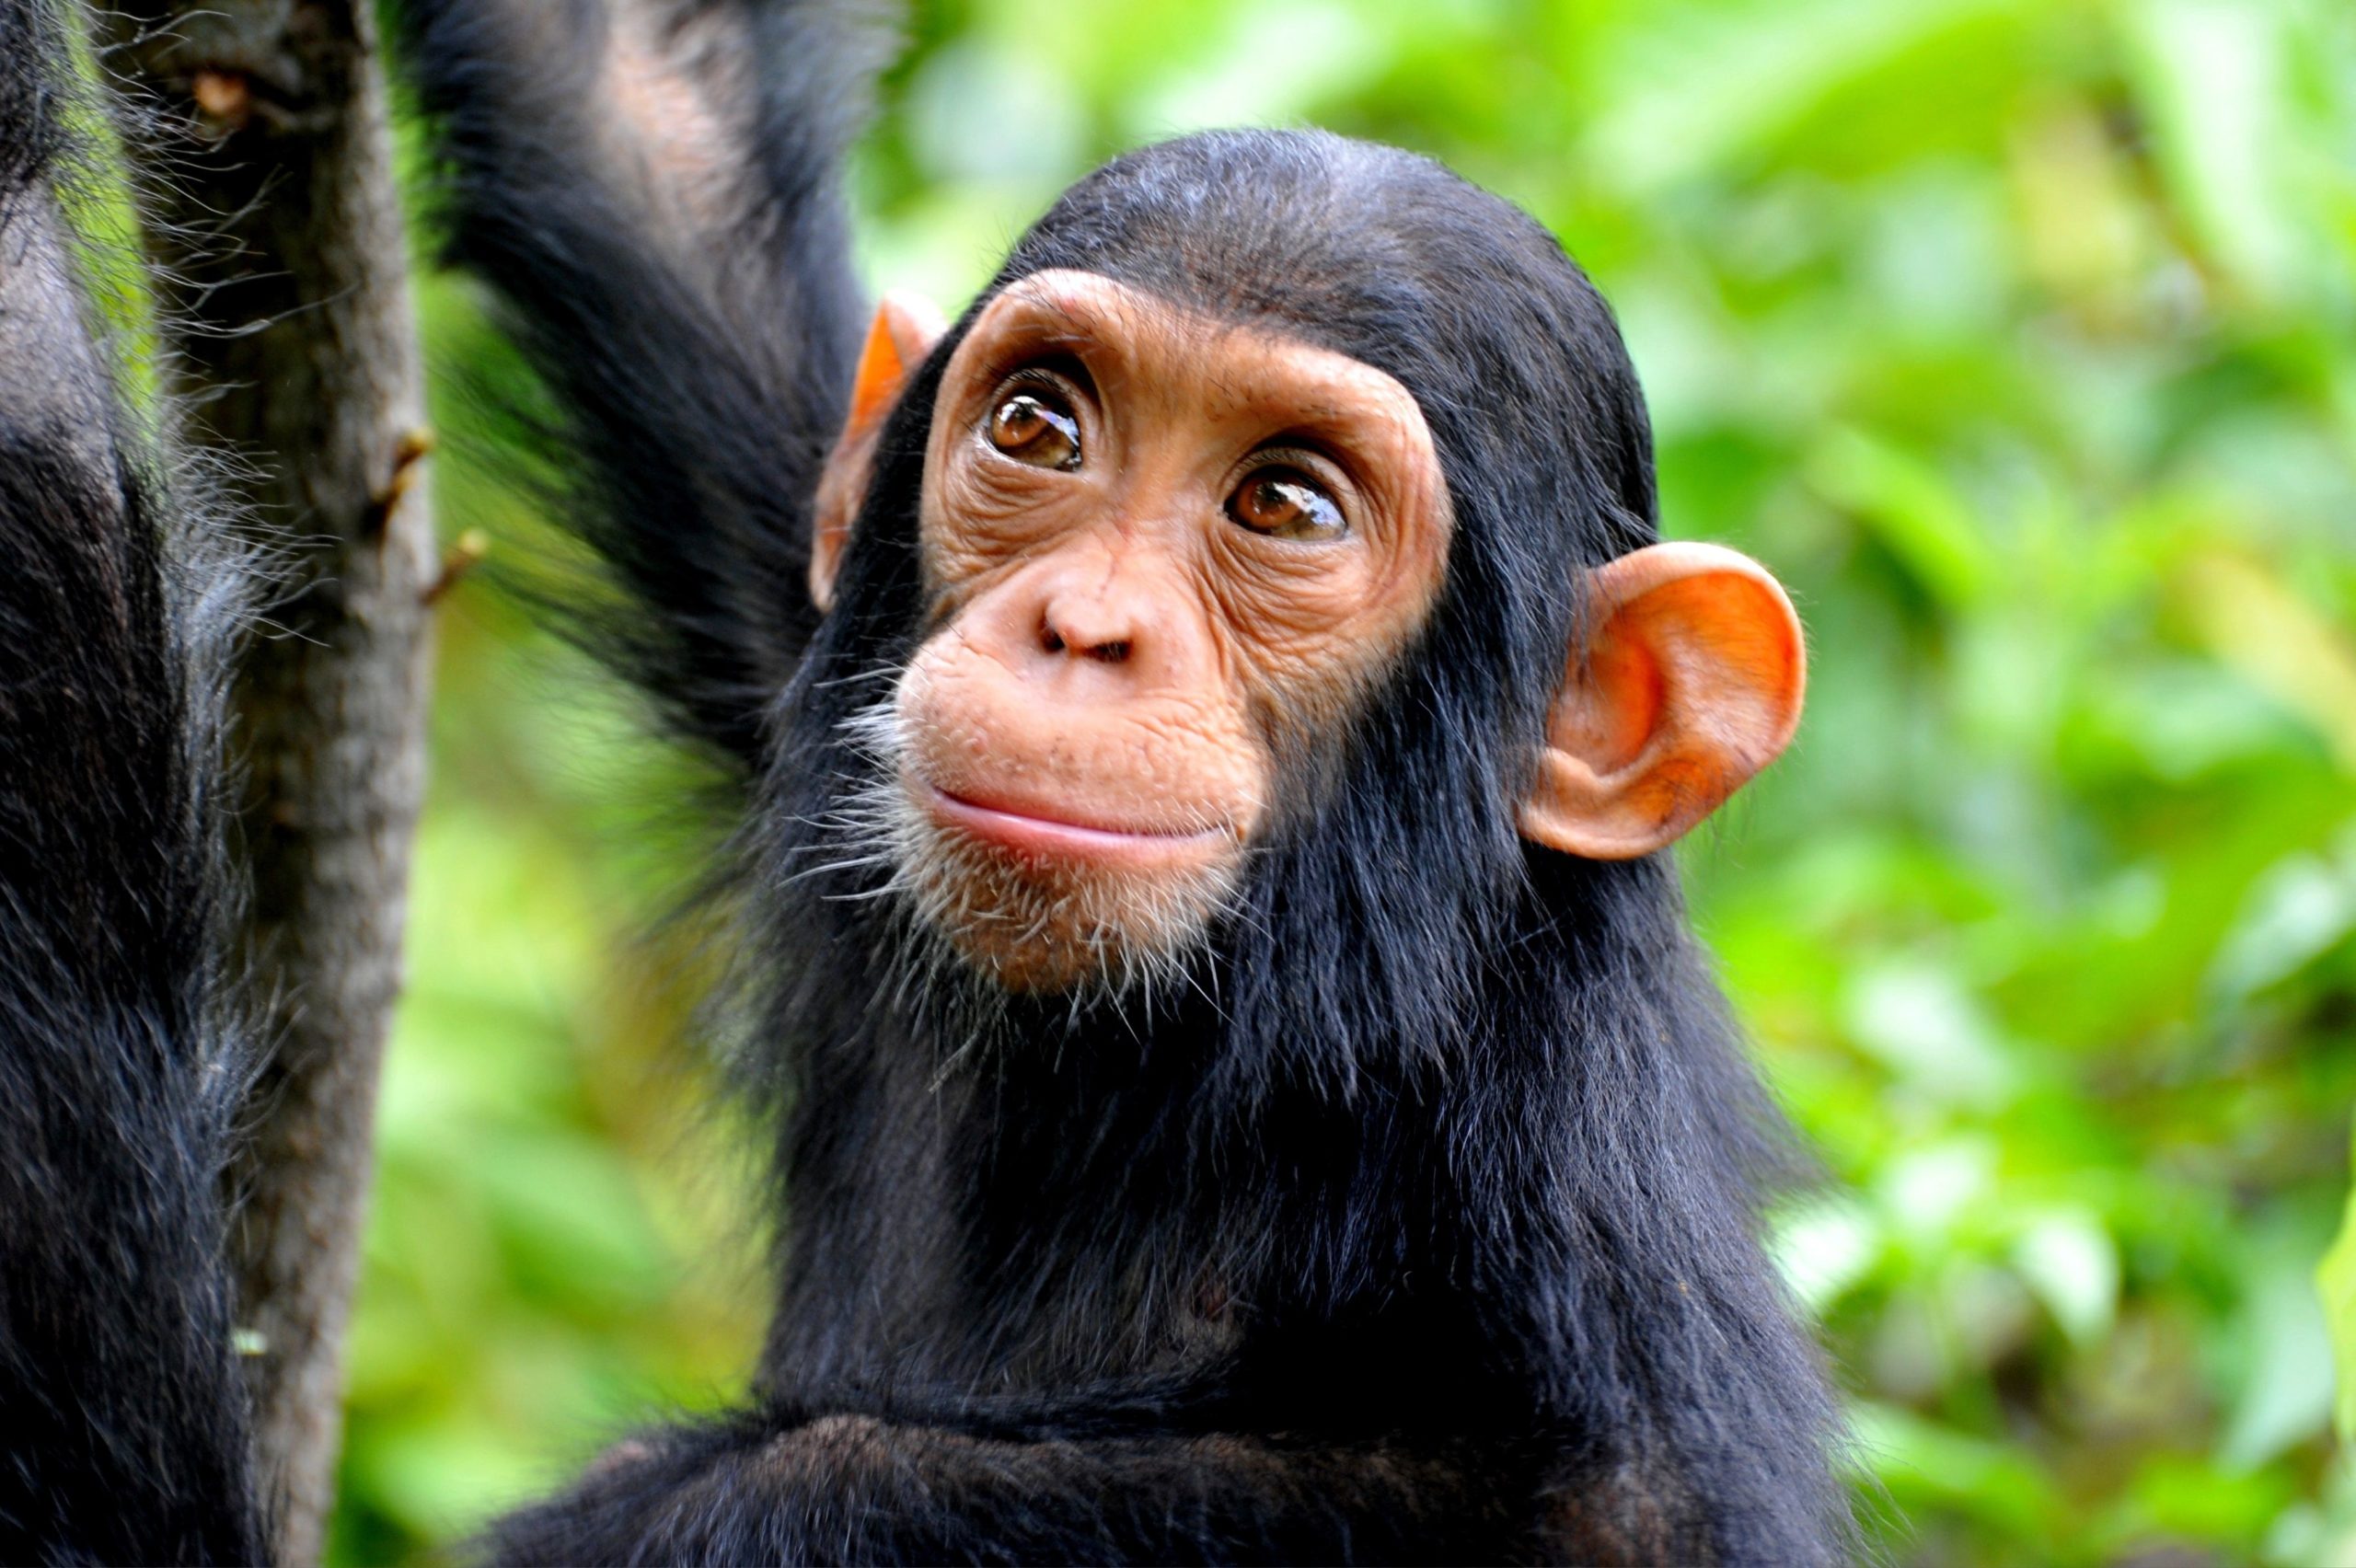 How to reschedule chimpanzee permits in Uganda